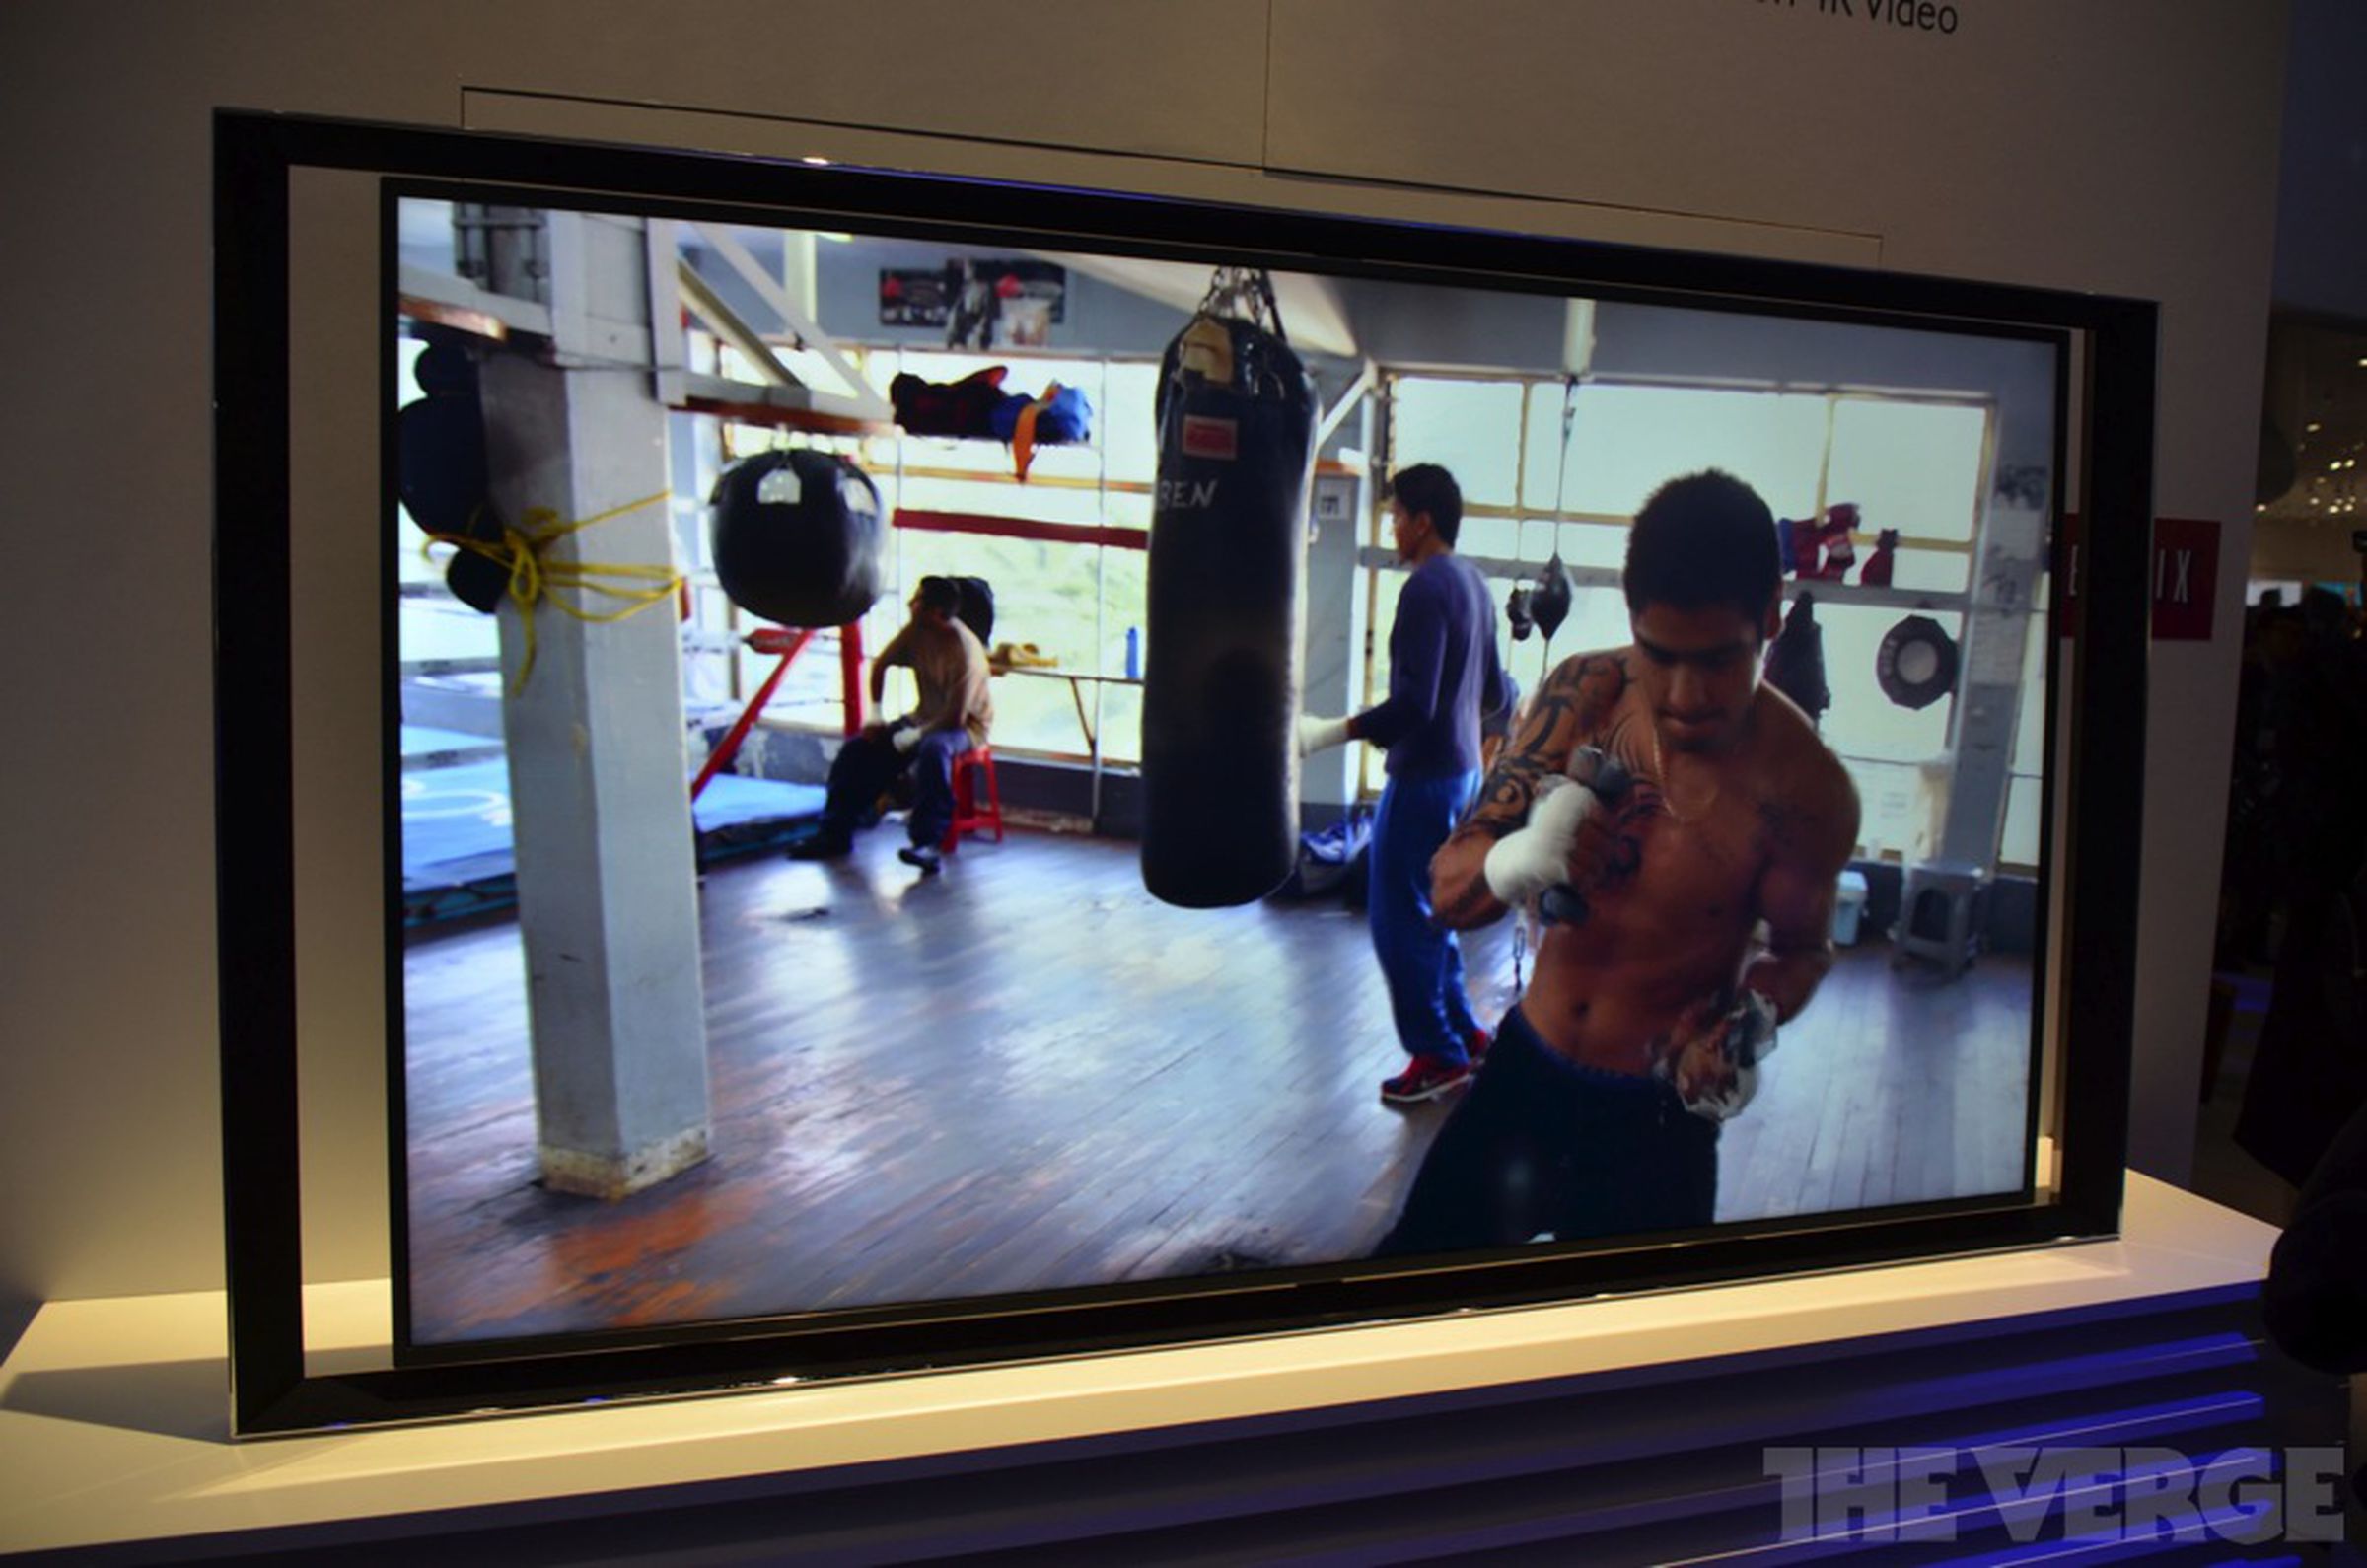 Netflix UHD streaming on a Samsung 4k TV photos